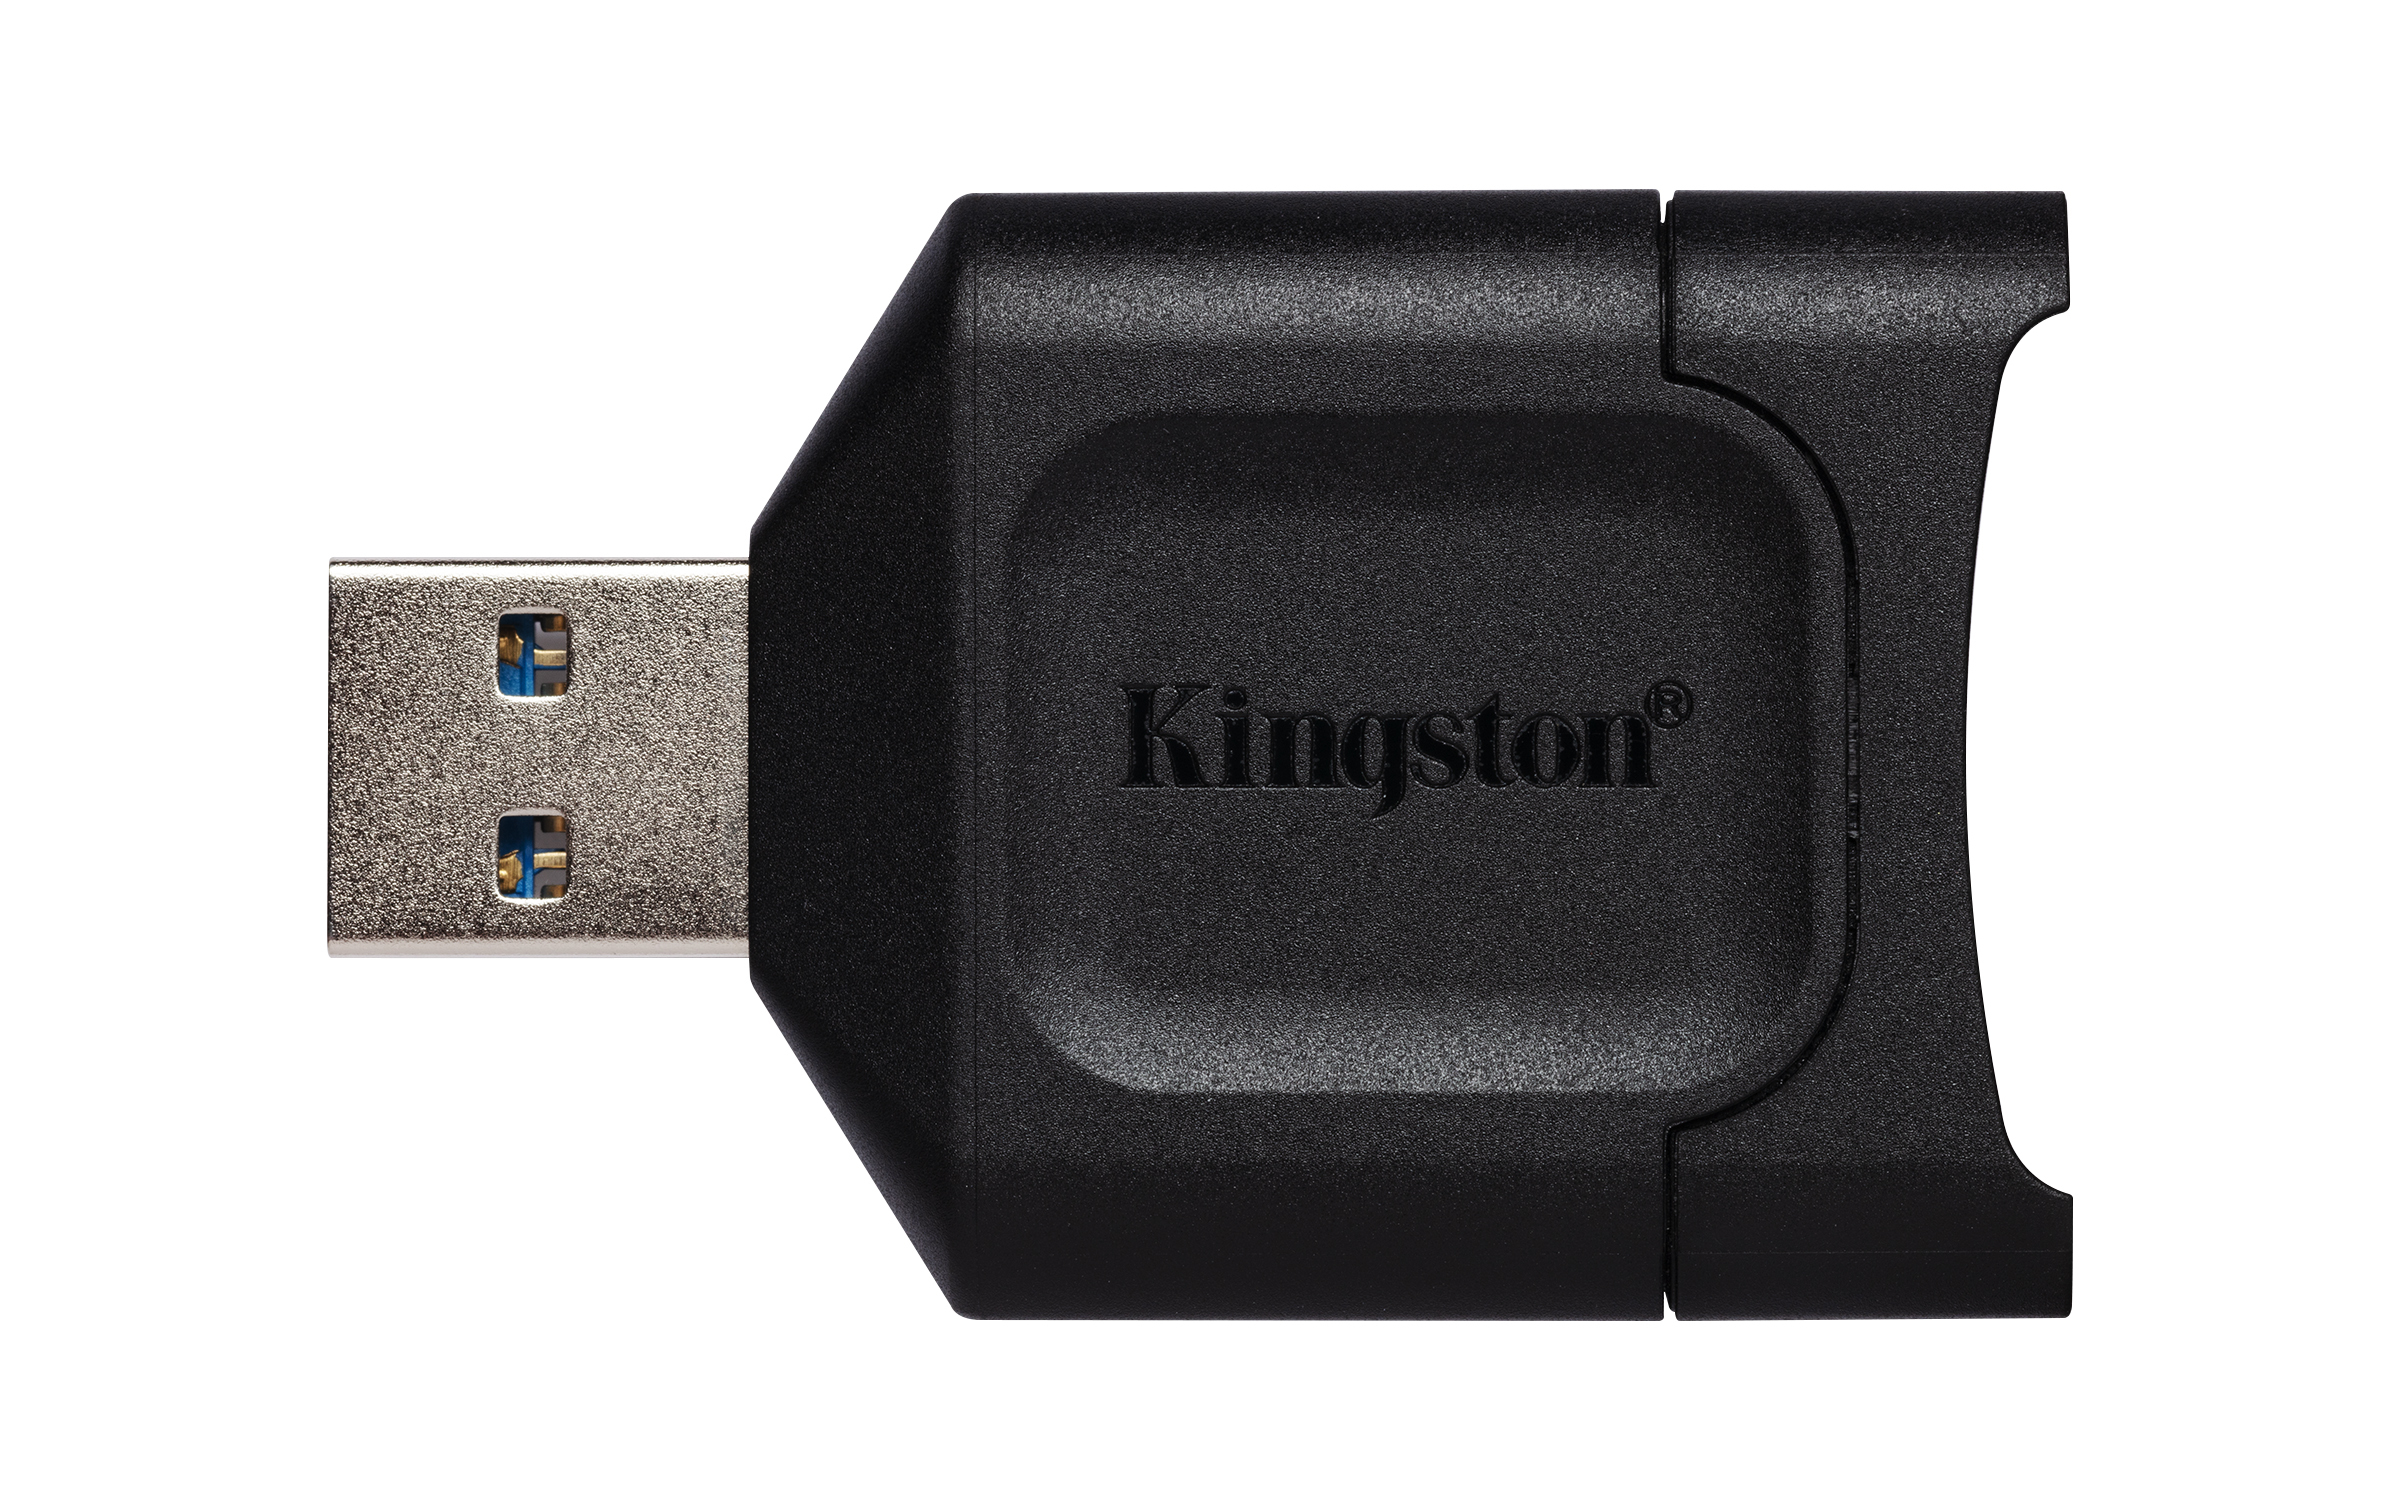 Kingston Mobilelite Plus SD Card Reader USB 3.2 UHS-II